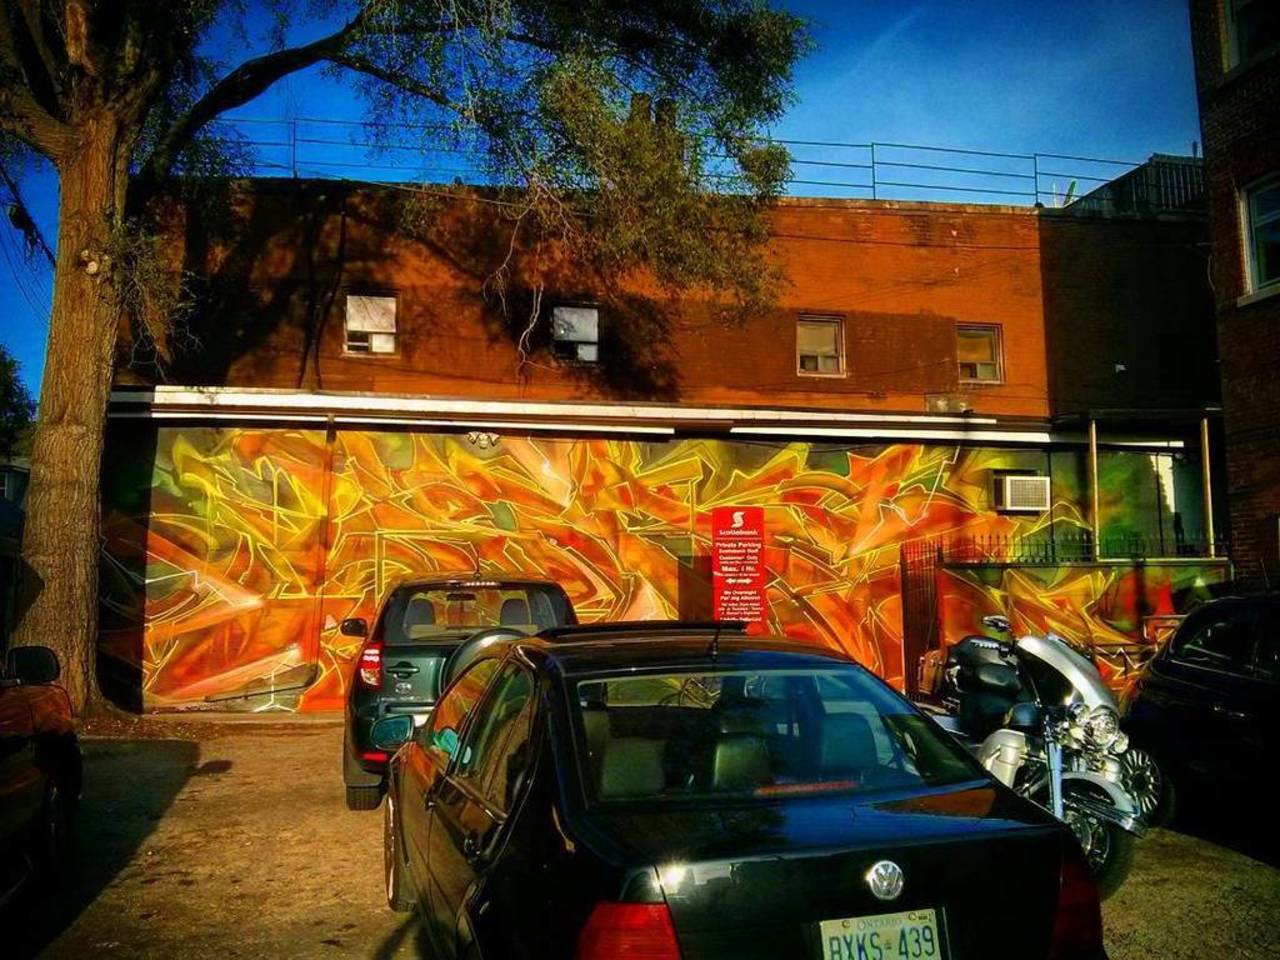 via #graff_n_such "http://ift.tt/1ReYjIc" #graffiti #streetart http://t.co/XJq9SzSwV4